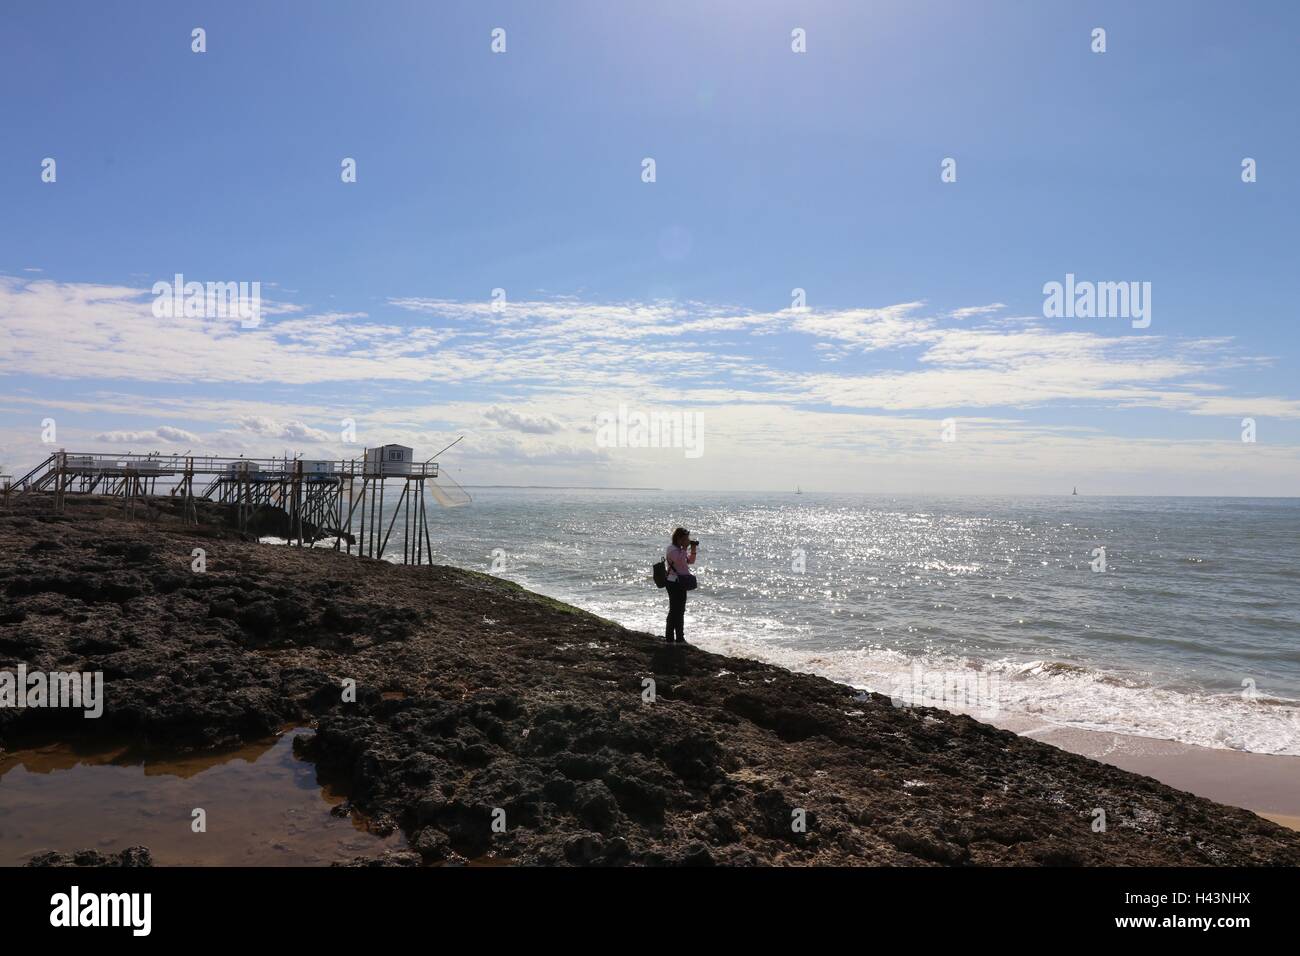 Woman on beach taking photos, Saint-Palais-sur-Mer, Rochefort, France Stock Photo